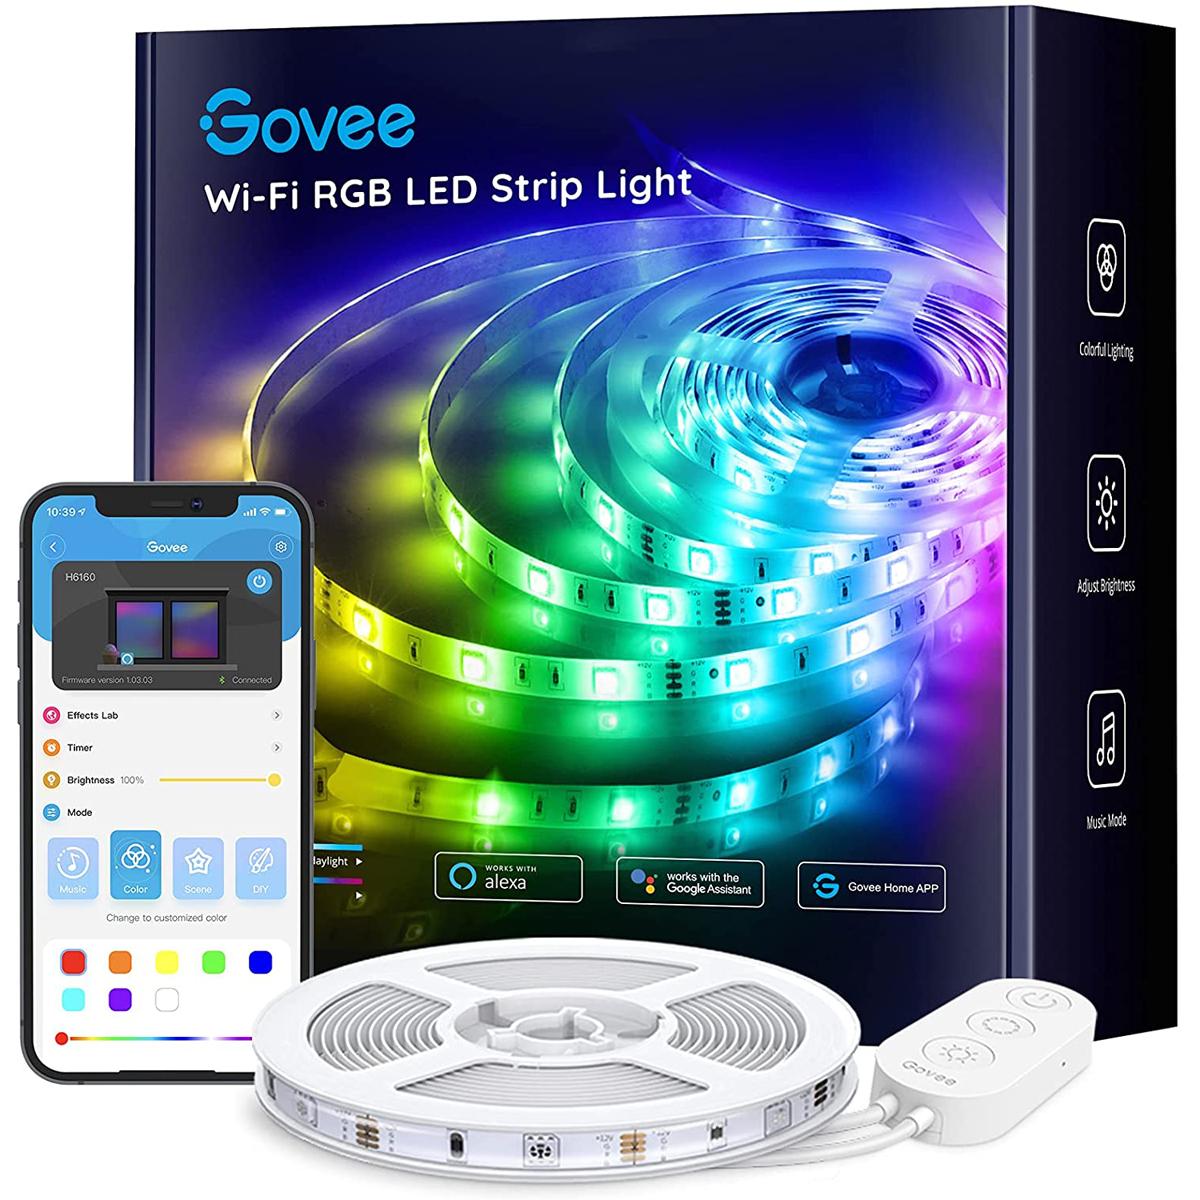 16.4in Govee Waterproof WiFi RGB LED Strip Lights for $11.39